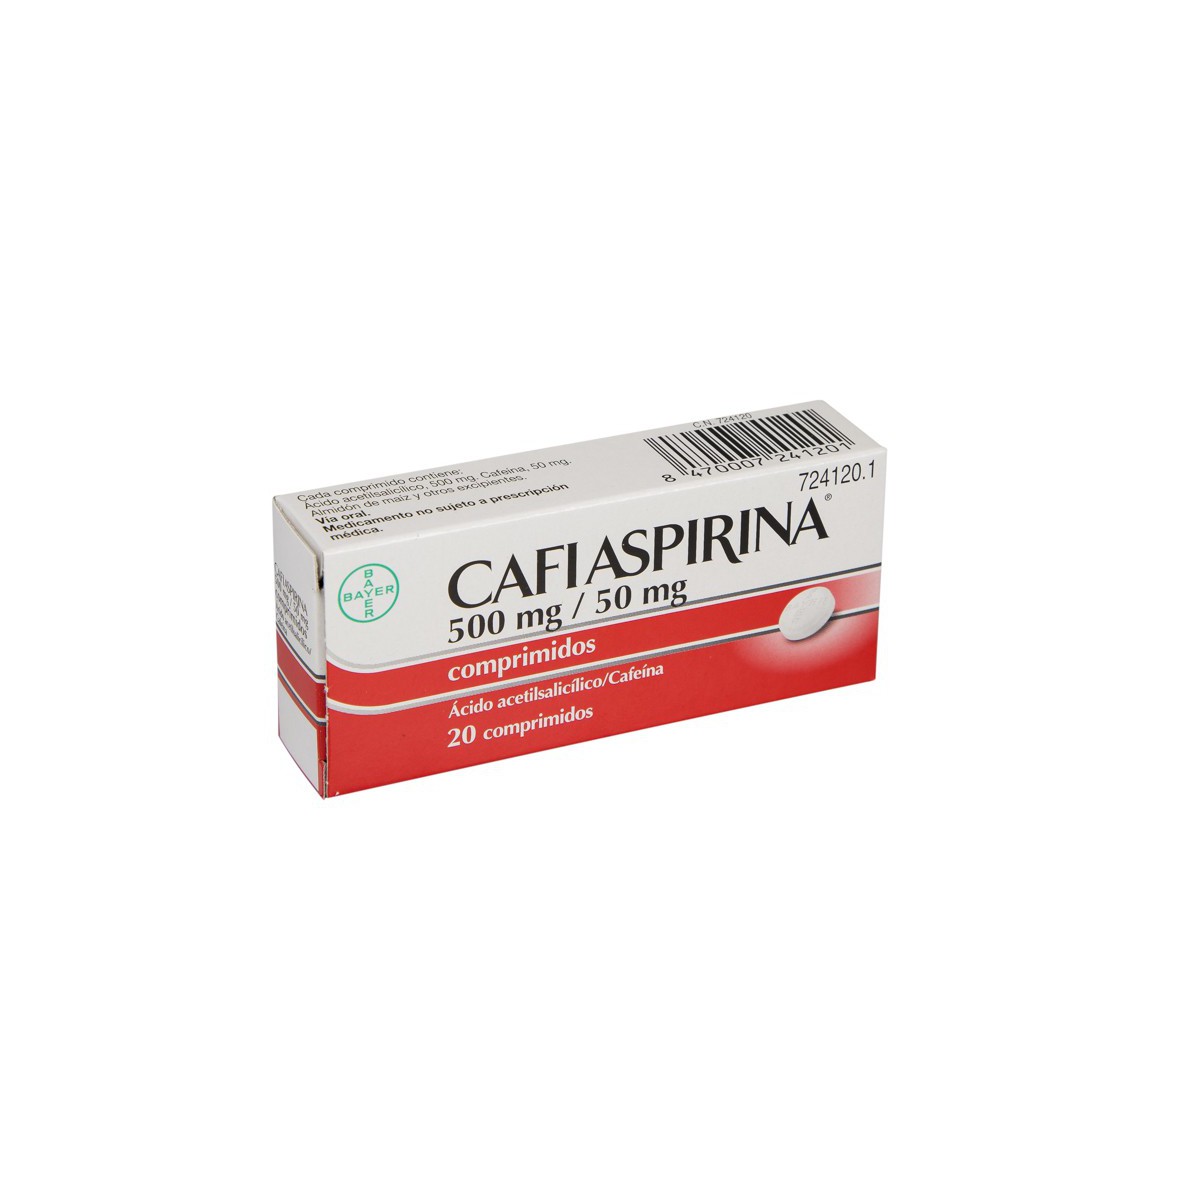 CAFIASPIRINA 500 mg/50 mg COMPRIMIDOS, 20 comprimidos